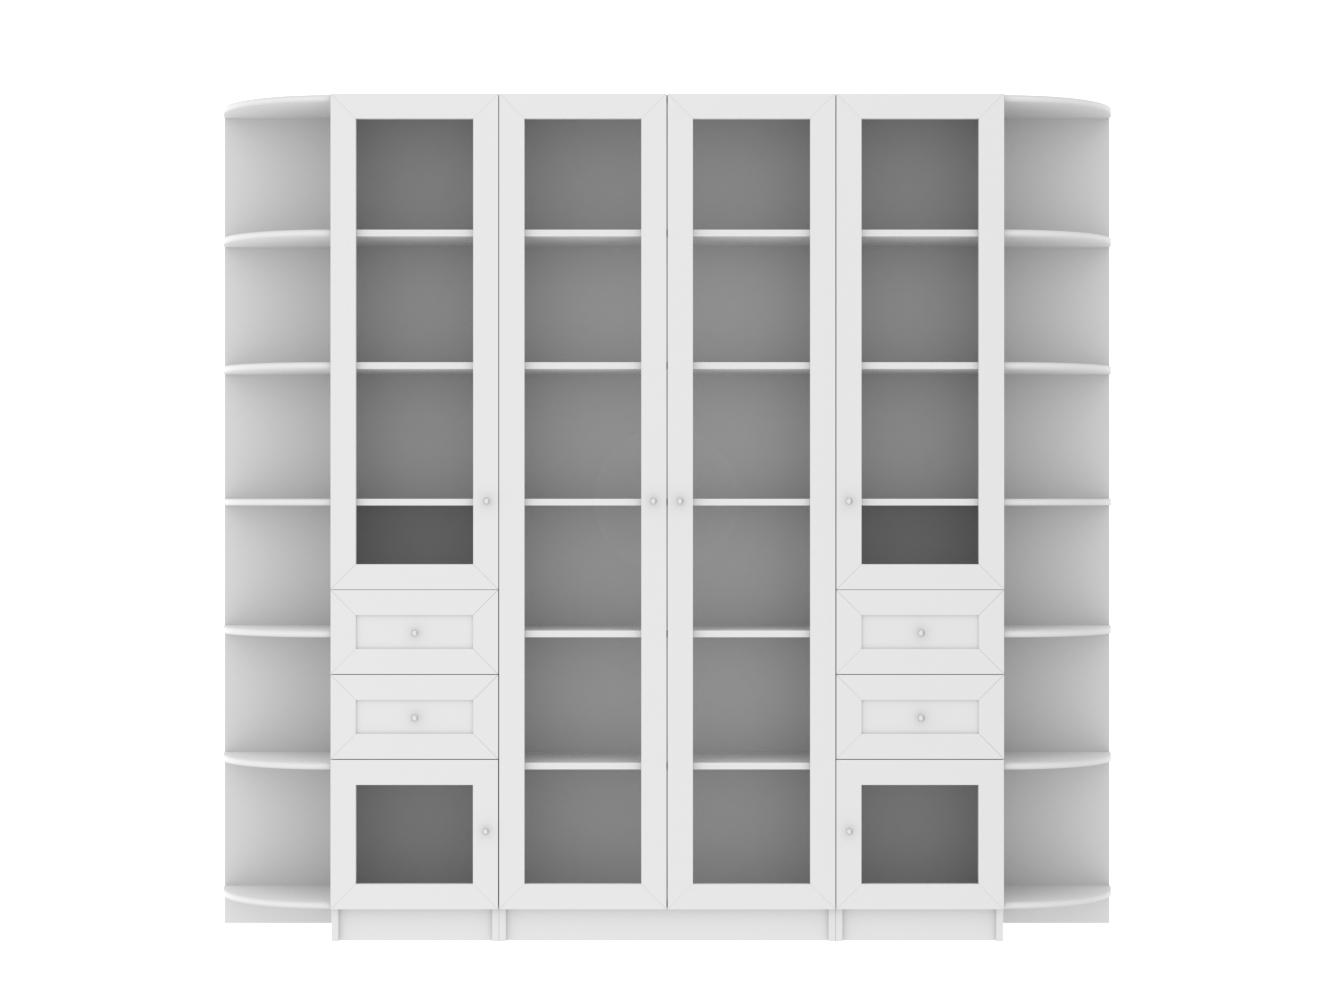  Книжный шкаф Билли 415 white ИКЕА (IKEA) изображение товара